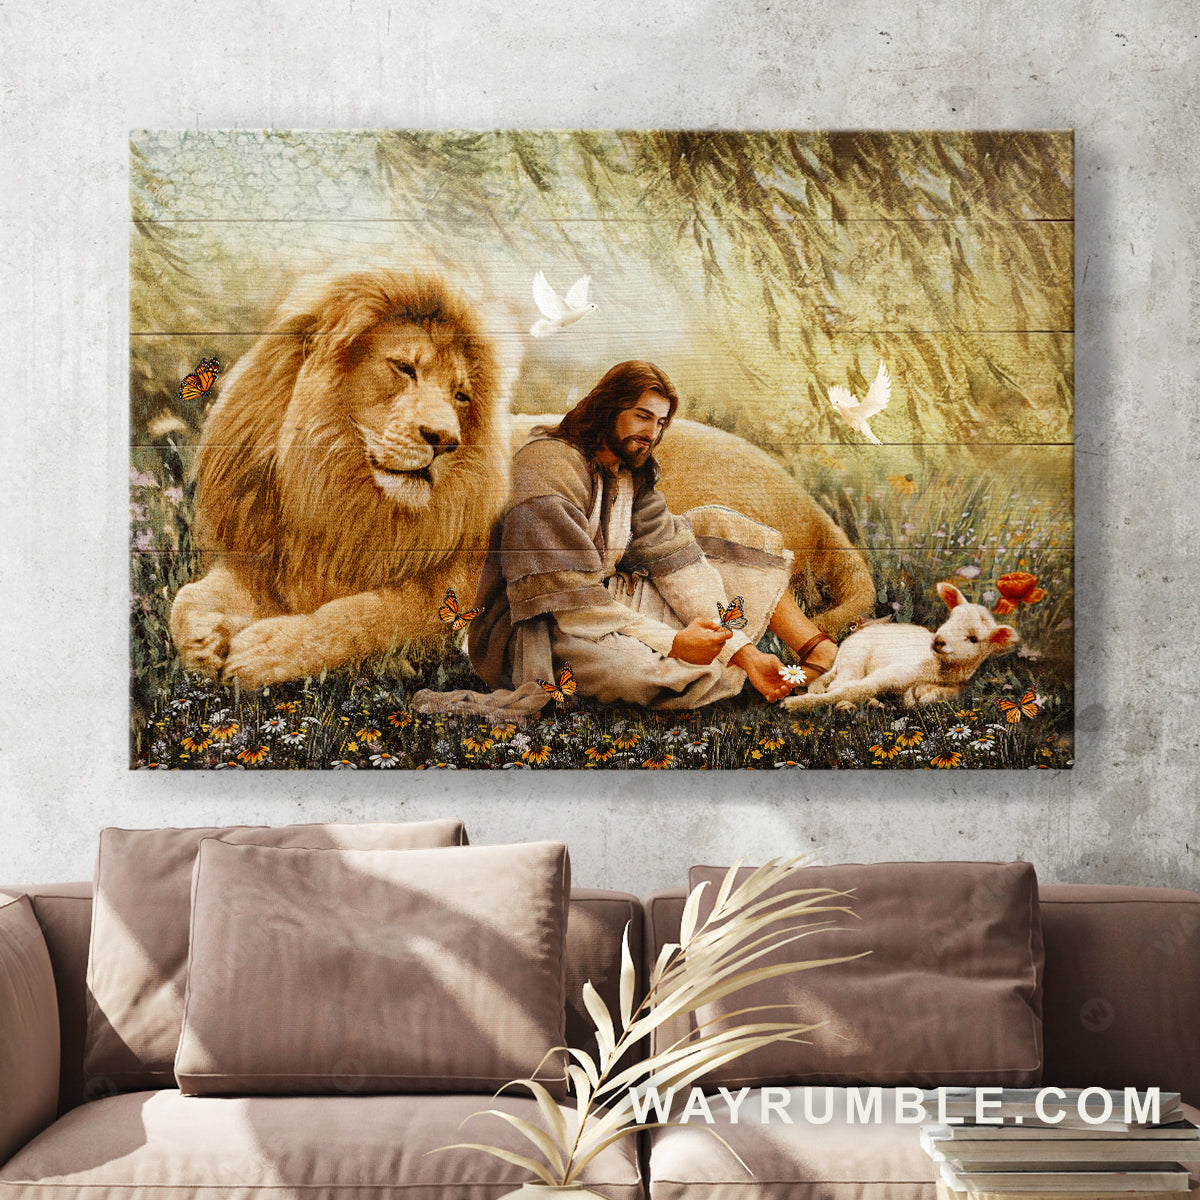 Jesus Christ, White Dove, The Lamb of God, The Lion of Judah - Jesus Landscape Canvas Prints, Christian Wall Art